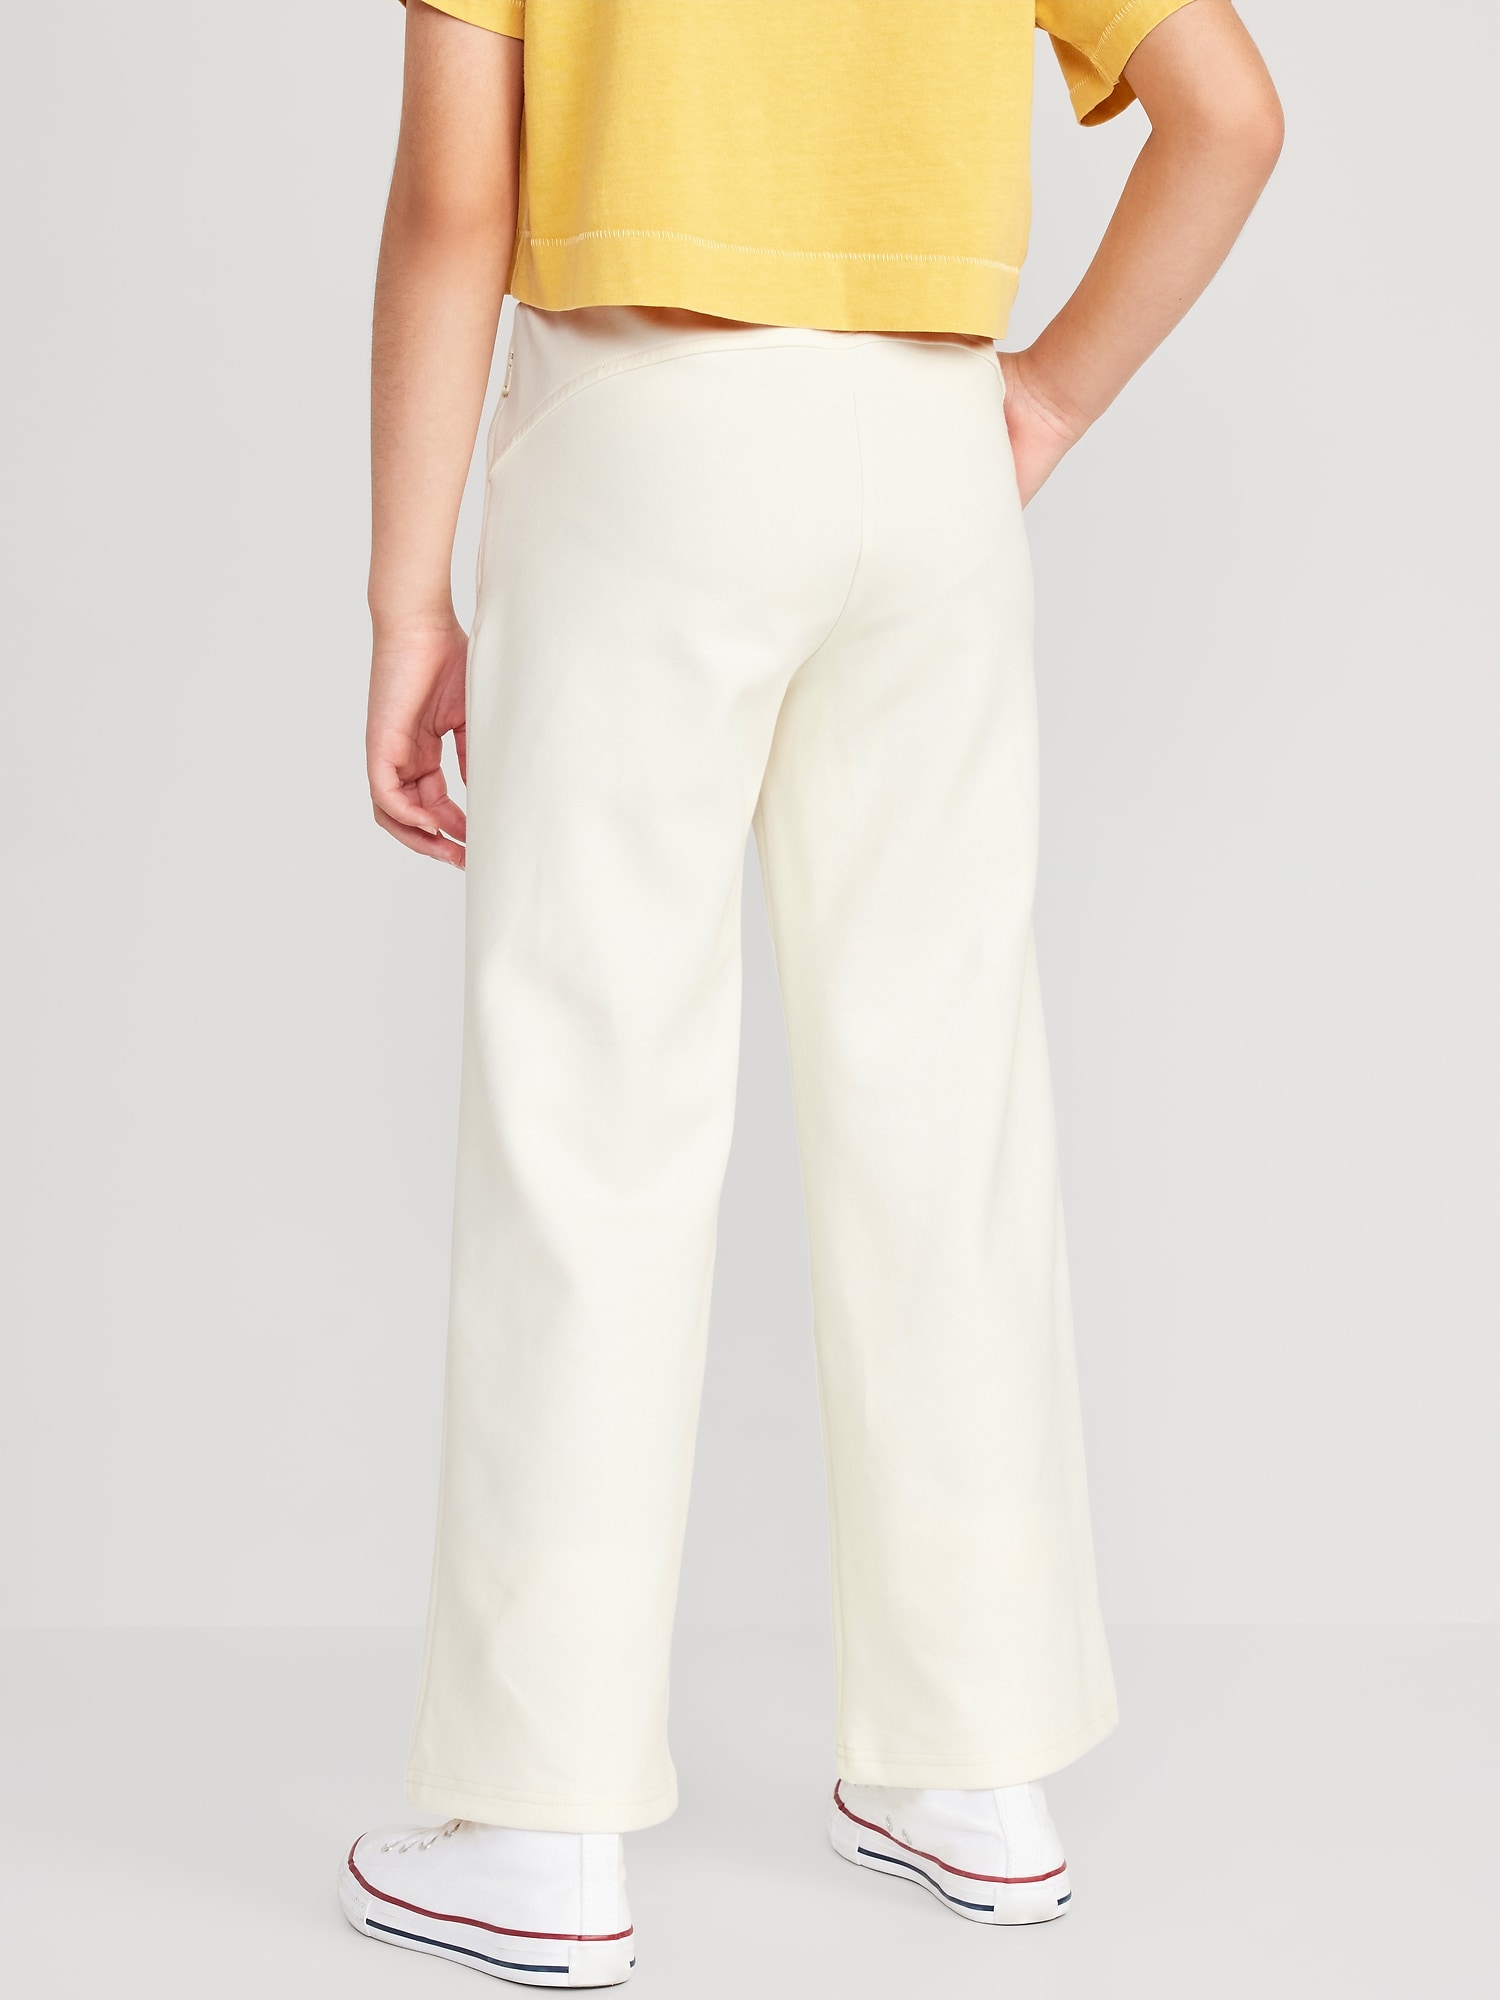 Zip-Pocket Pull-On Fleece Pants